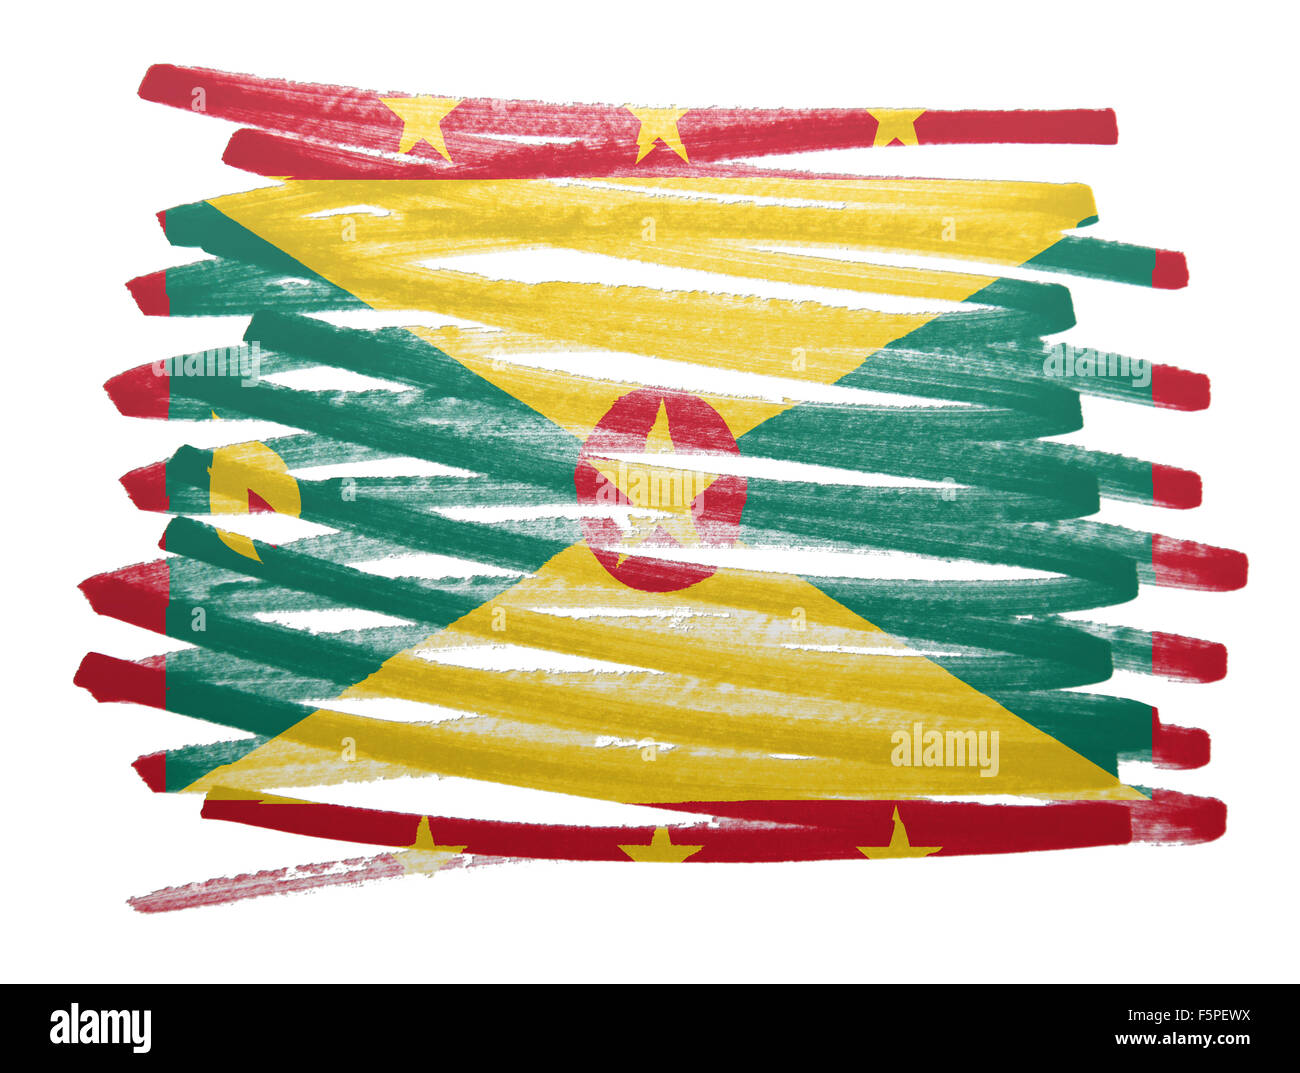 Flag illustration made with pen - Grenada Stock Photo